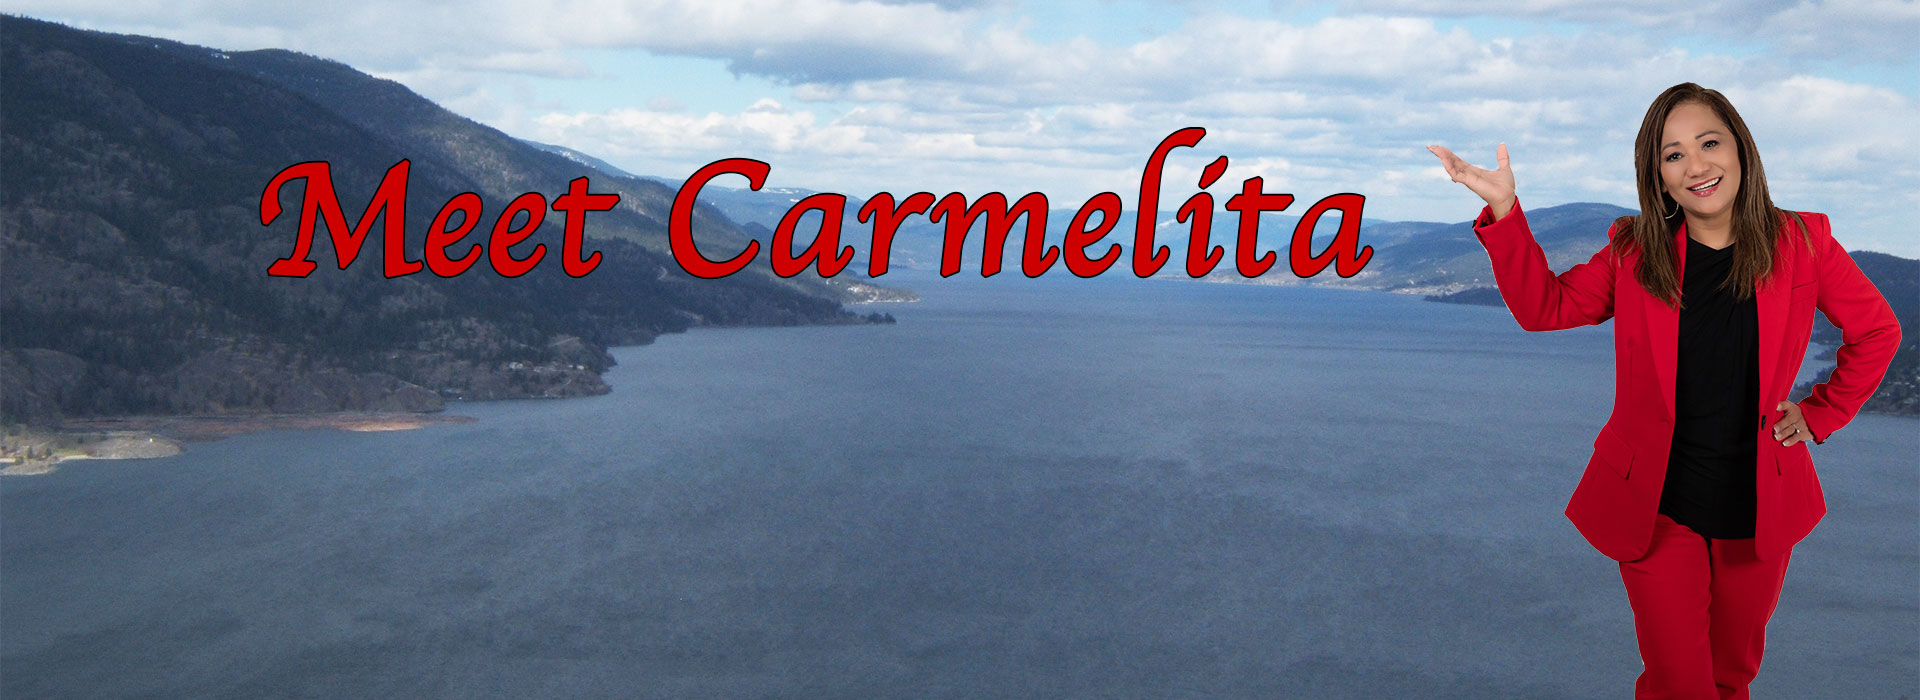 Meet Carmelita, well-known Kelowna area Realtor associated with Oakwyn Realty Okanagan.  